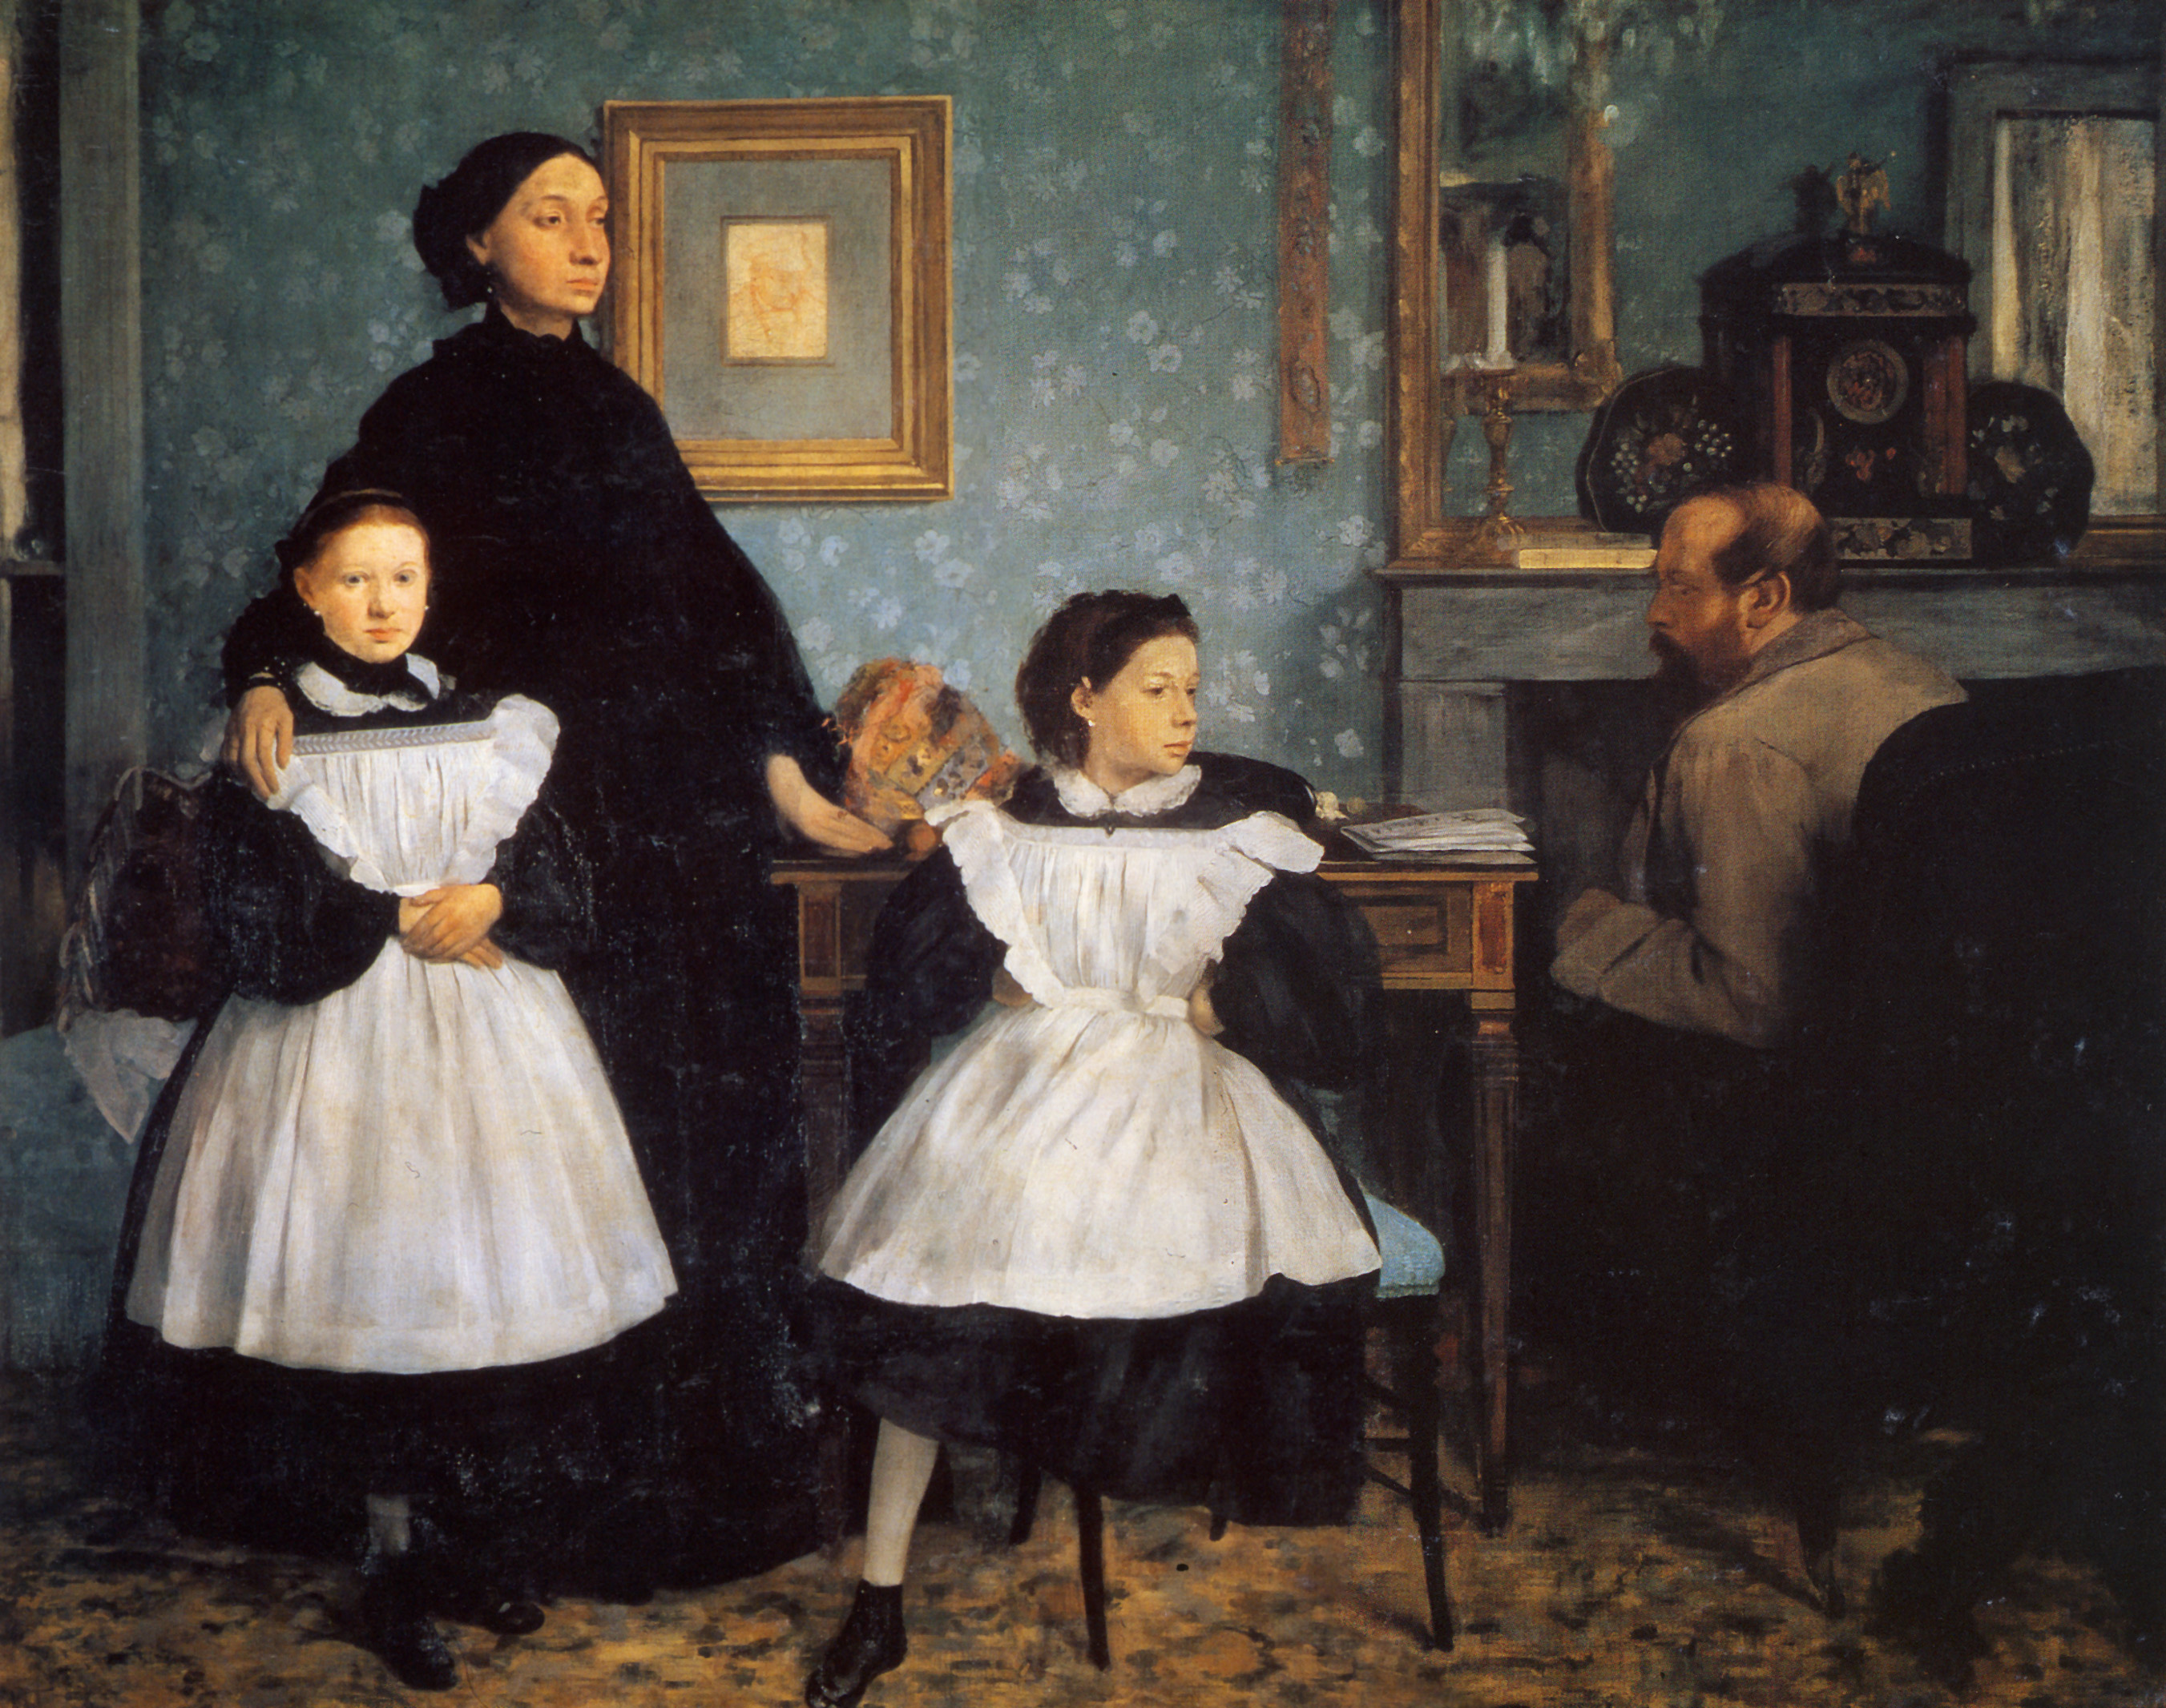 Rodzina Belleli by Edgar Degas - 1860-1862 - 200 x 250 cm 